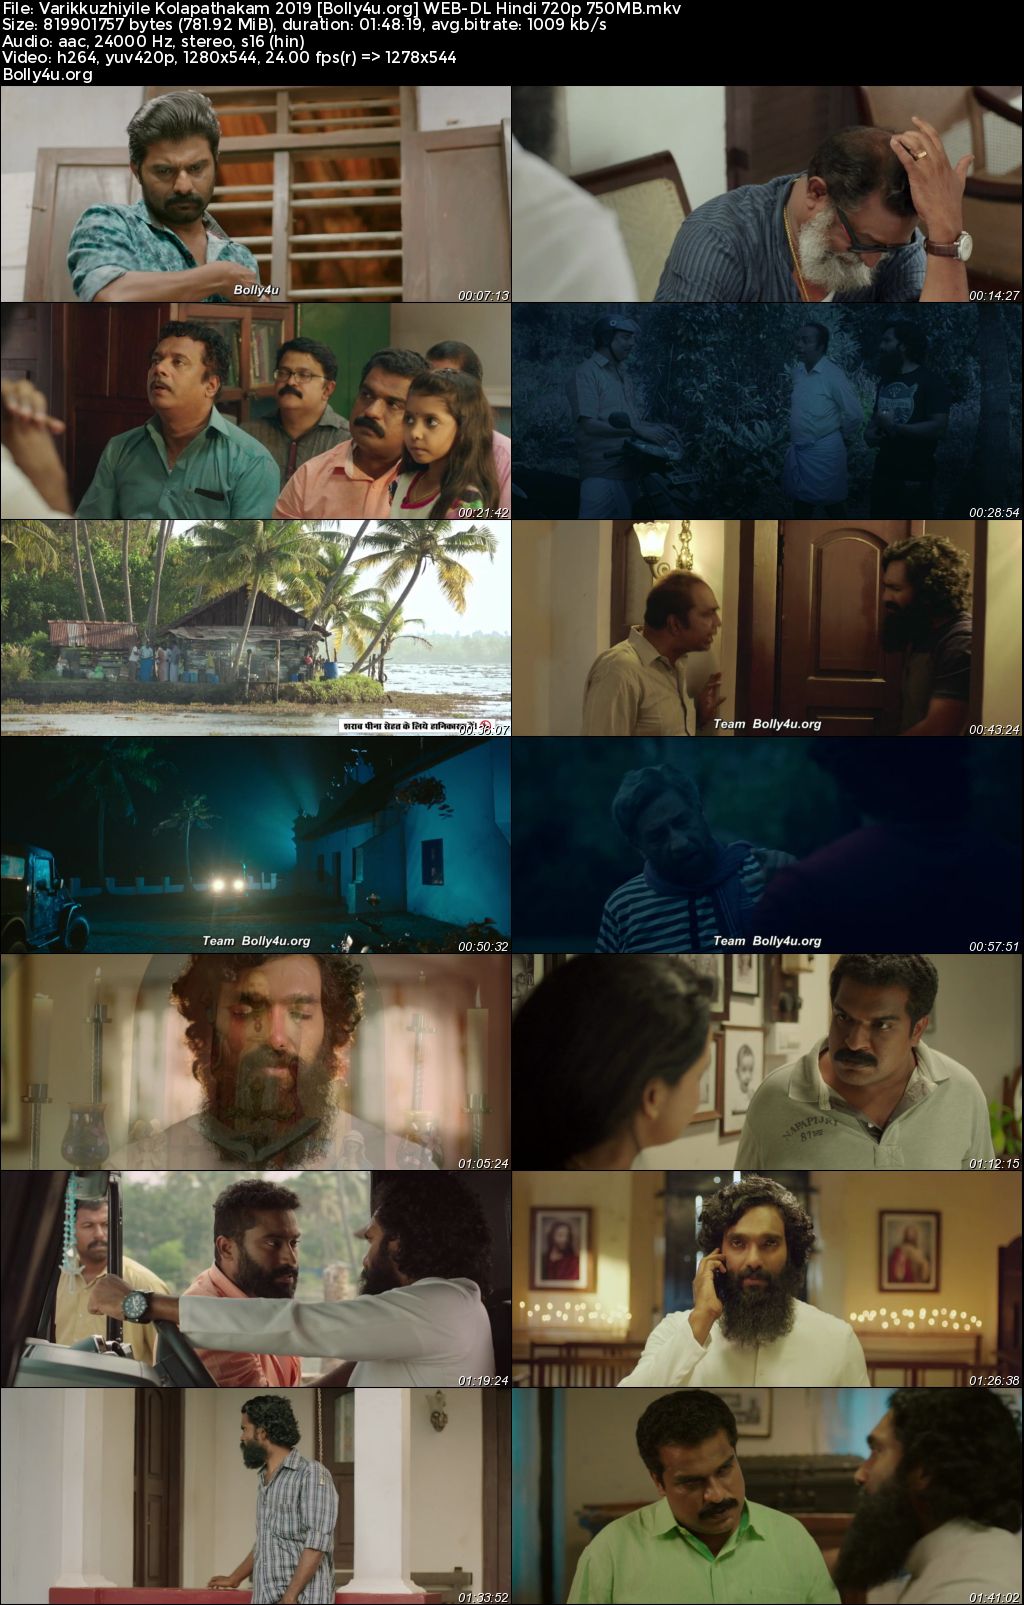 Varikkuzhiyile Kolapathakam 2019 WEB-DL Hindi Dubbed ORG Full Movie Download 1080p 720p 480p